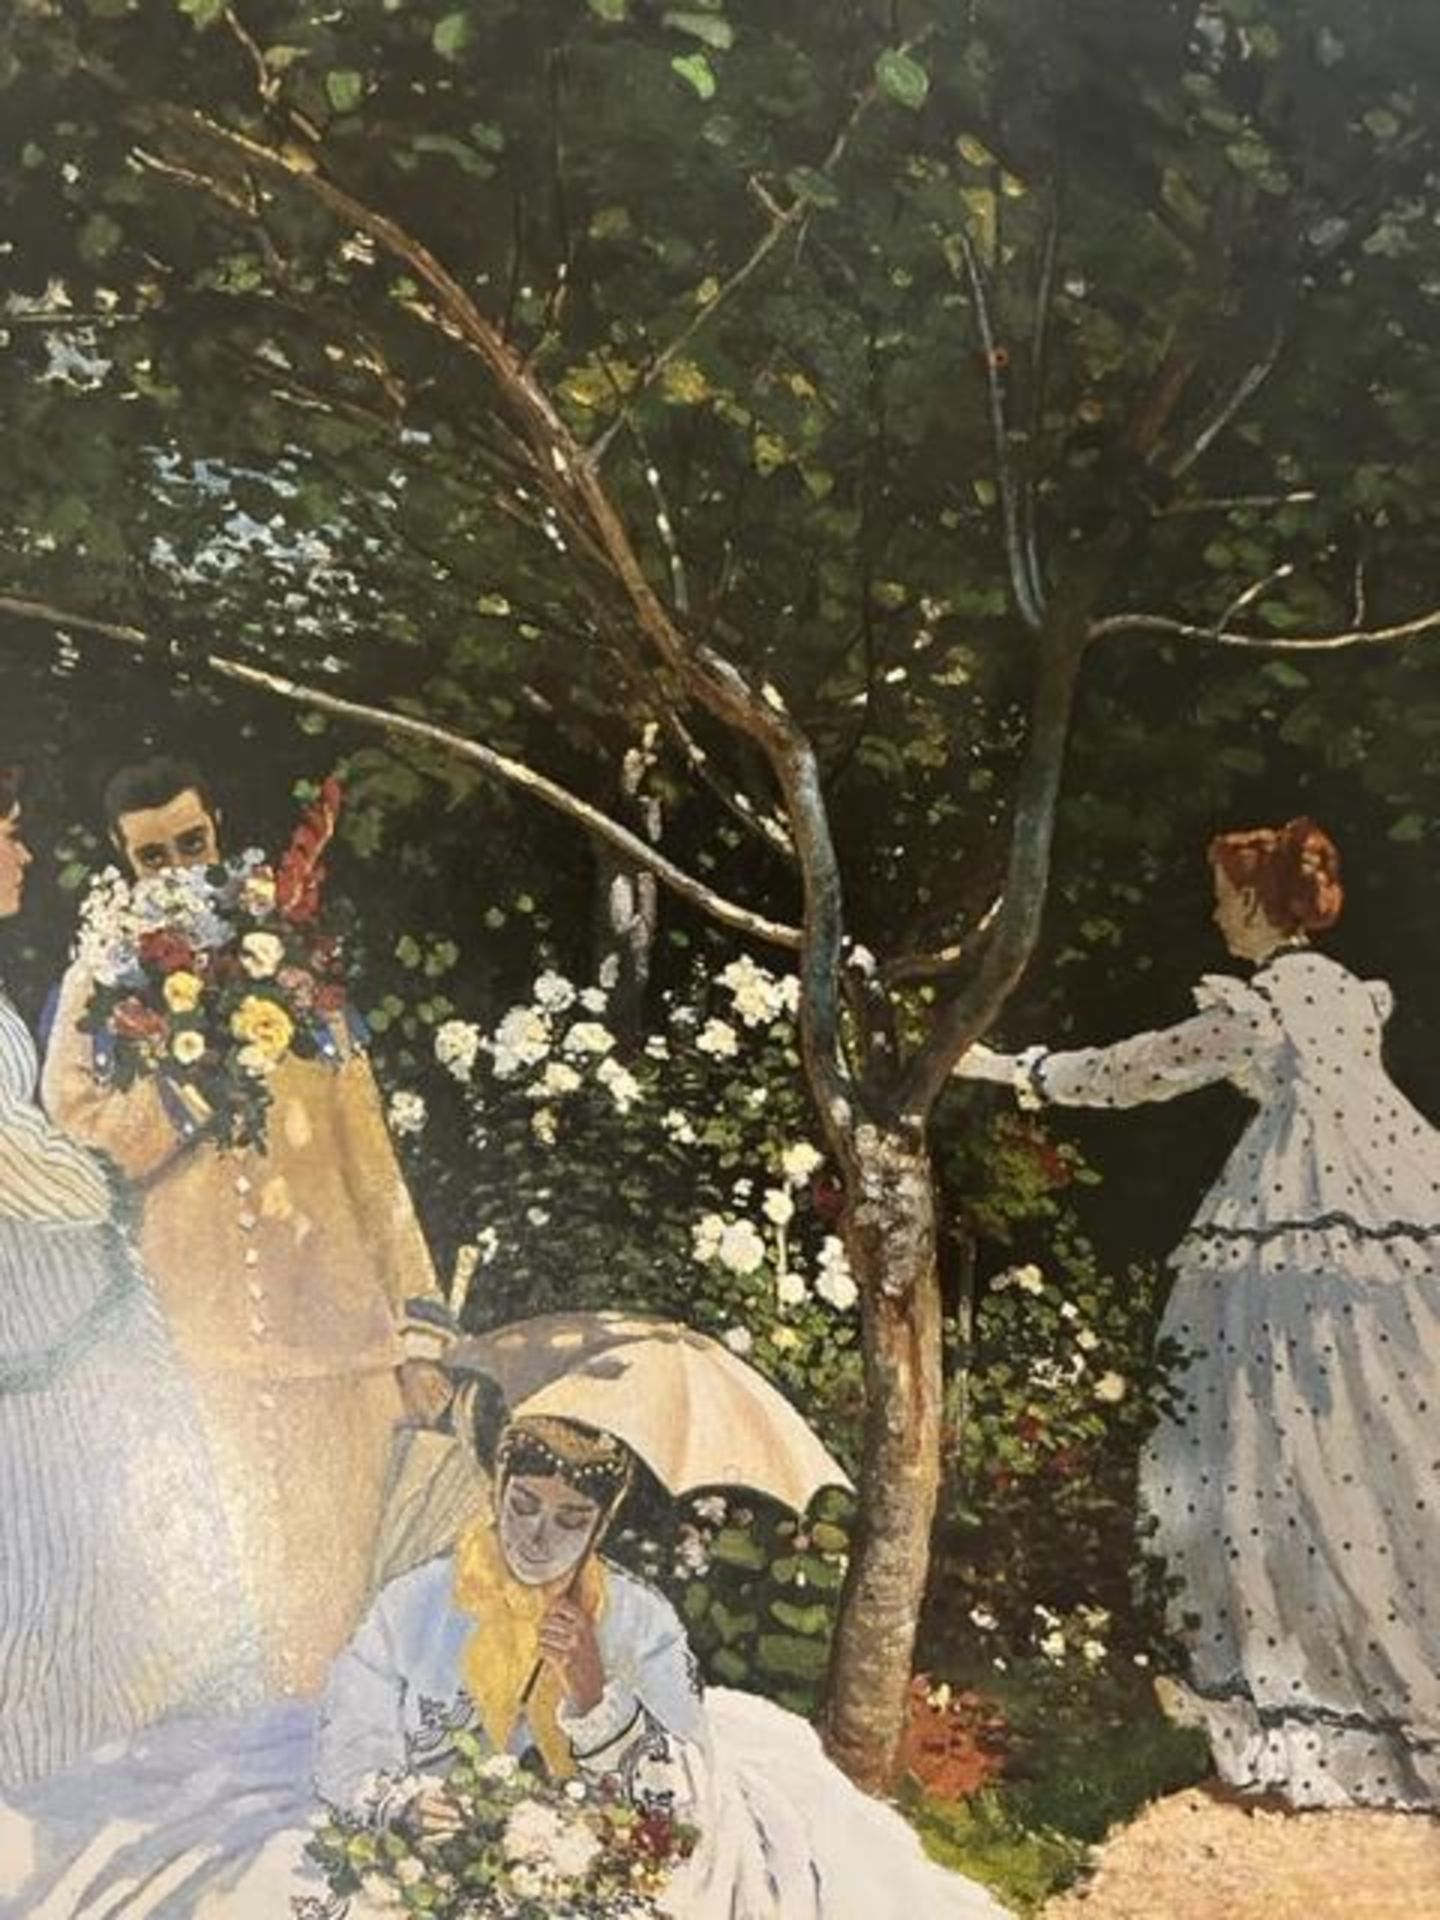 Claude Monet "Untitled" Print.